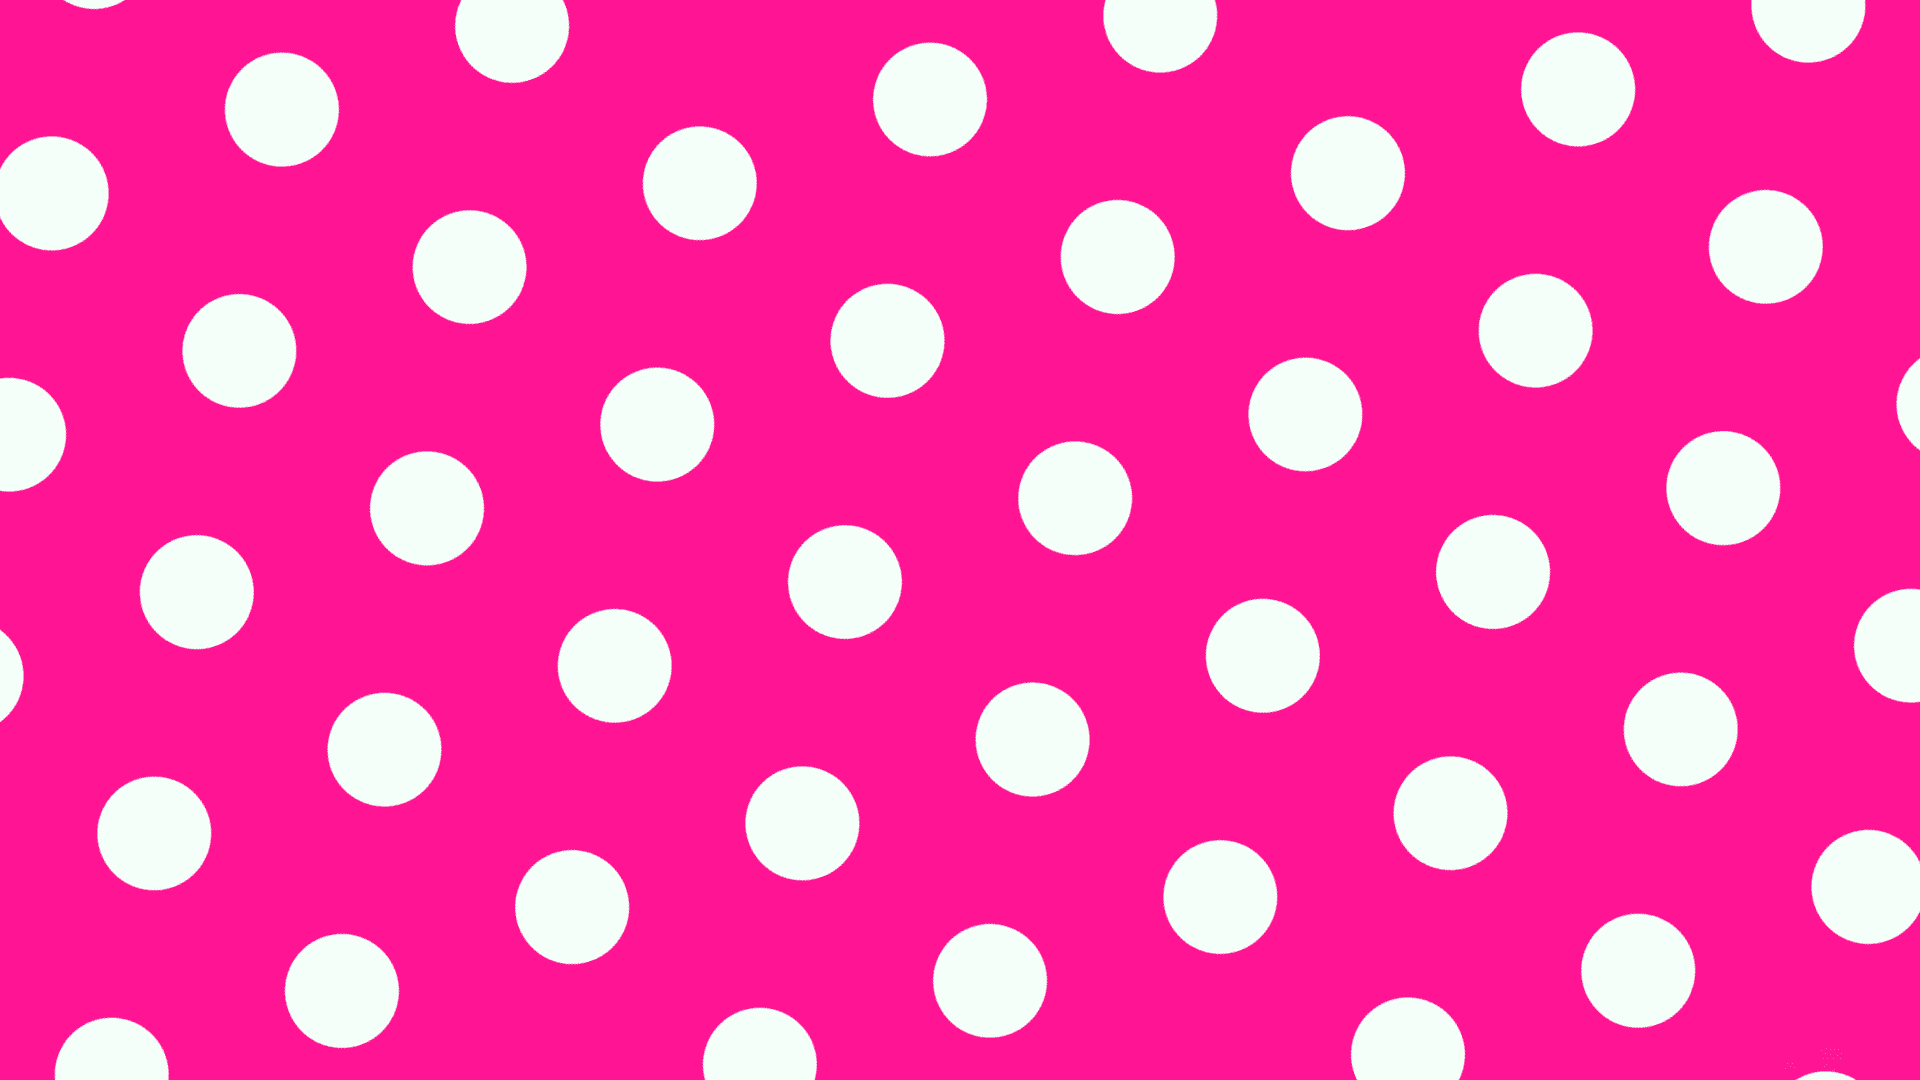 light yellow polkadots - Google Search  Polka dots wallpaper, Pink polka  dots wallpaper, Dots wallpaper